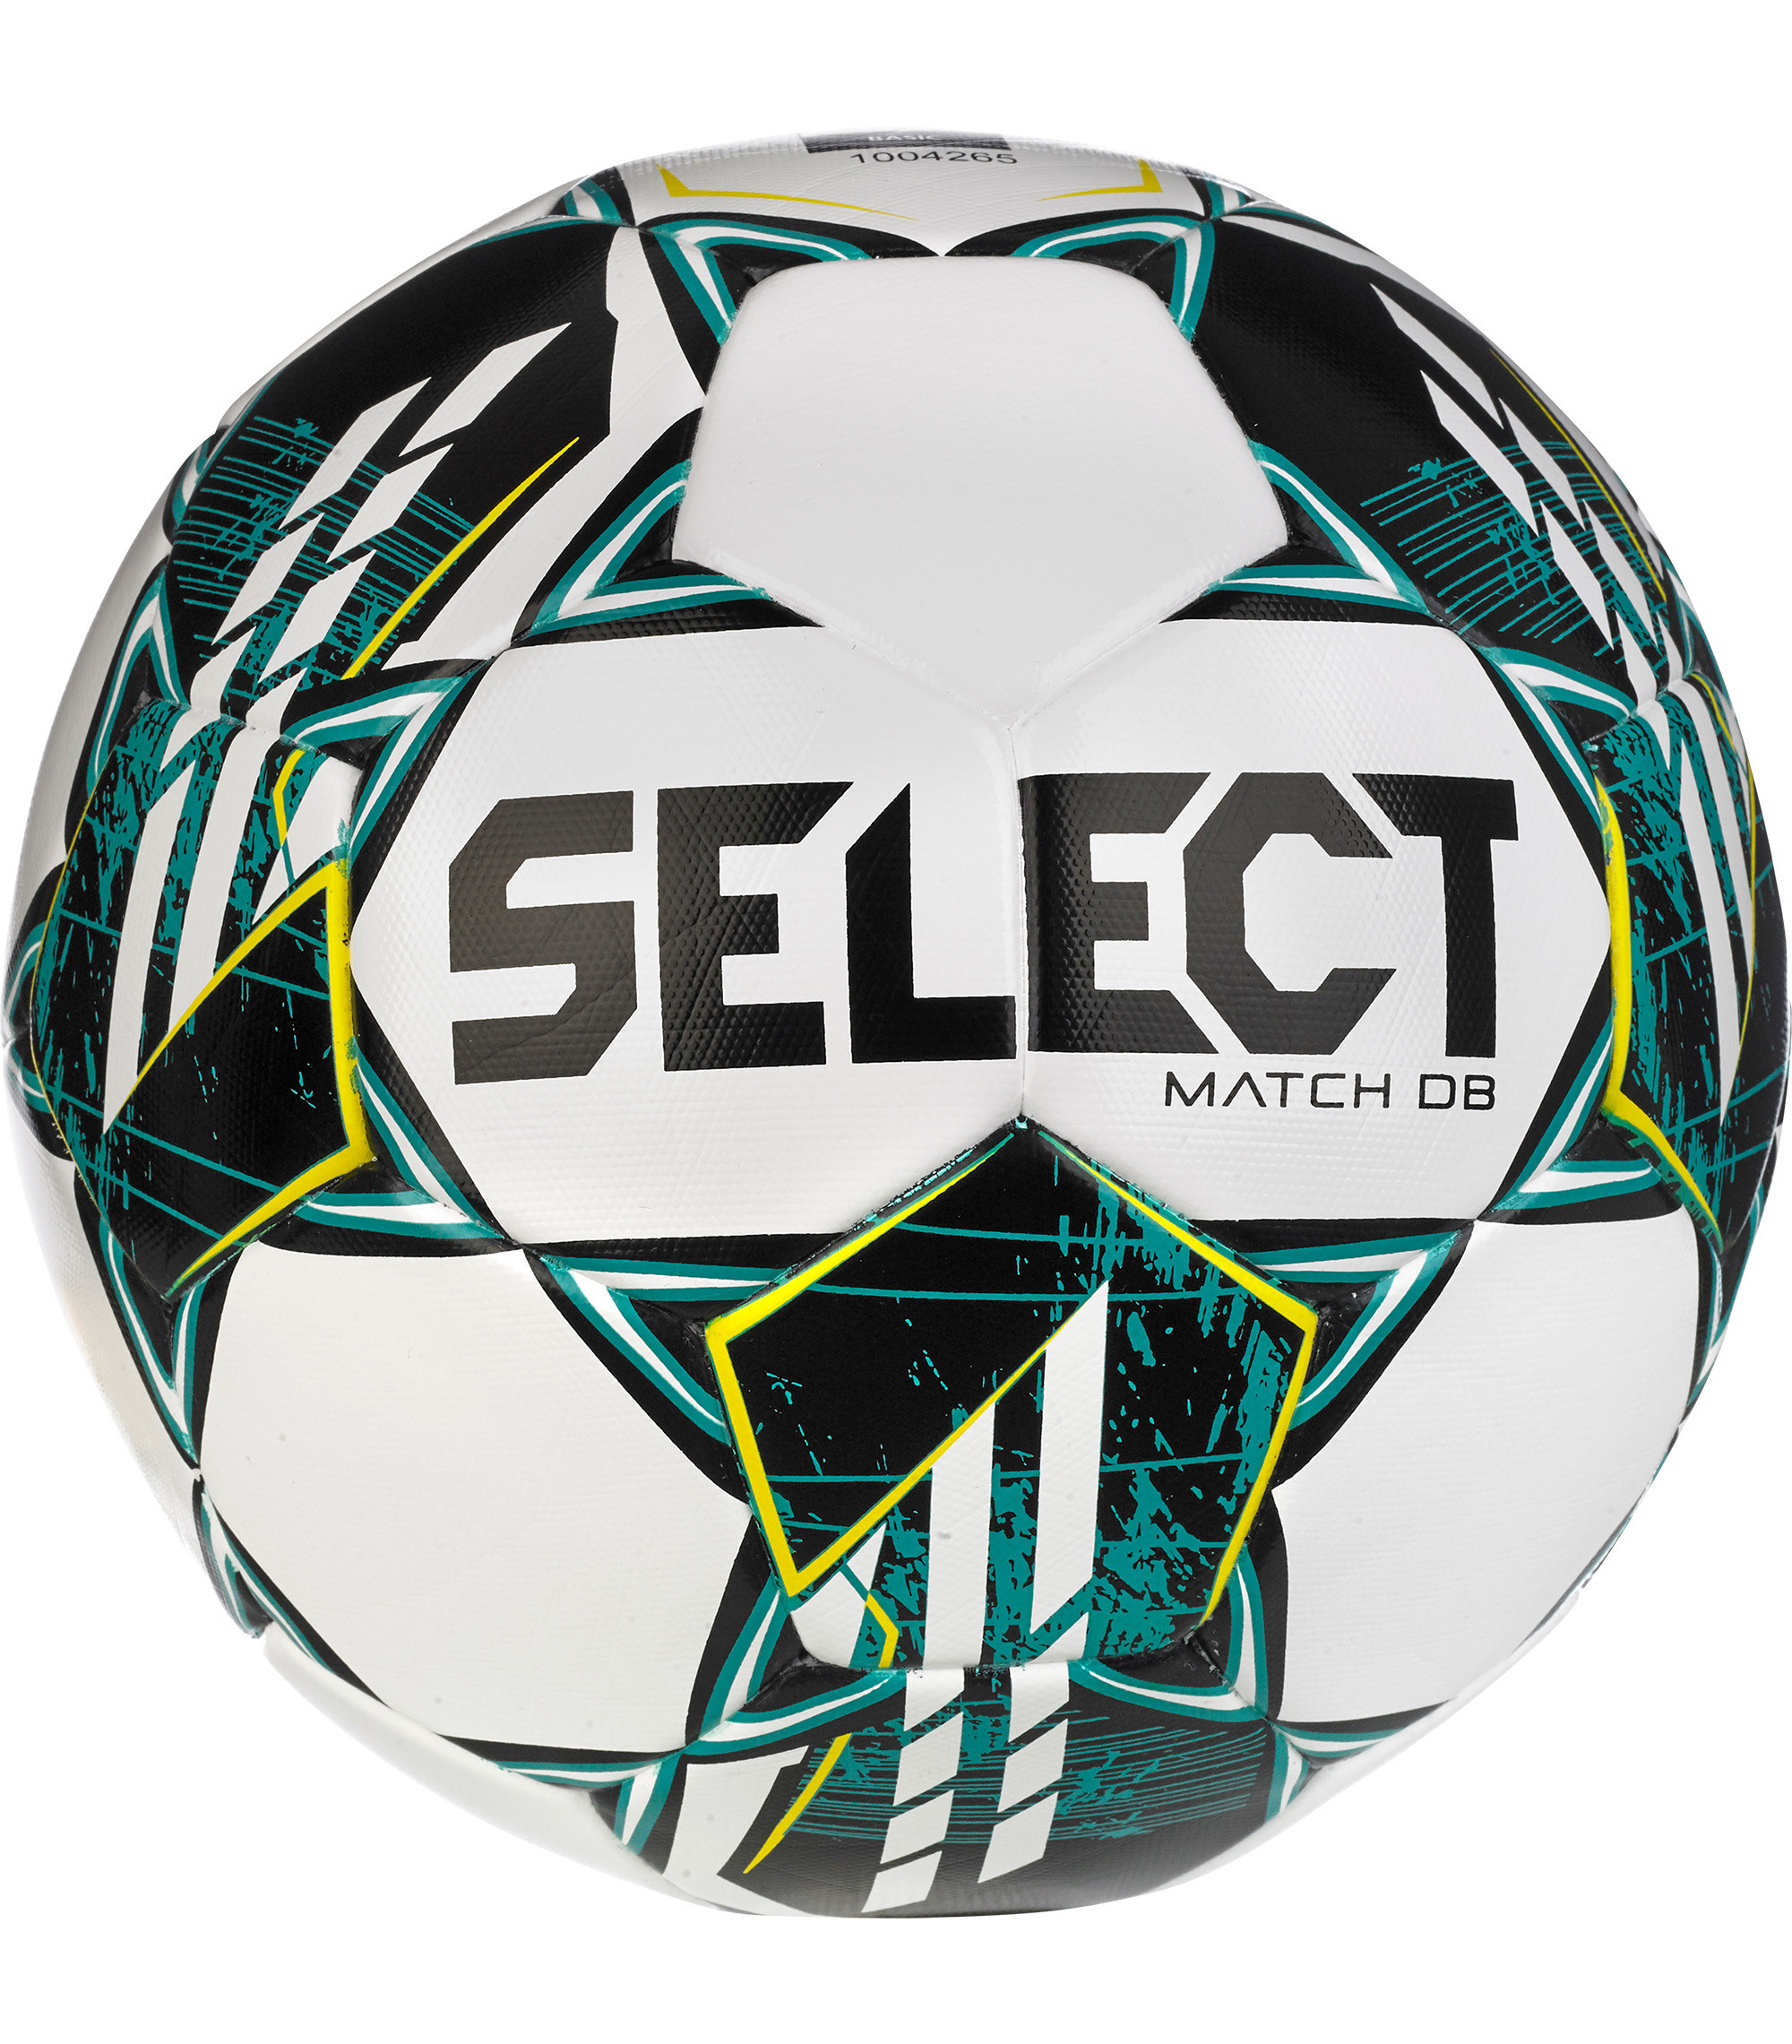 Ballon foot taille 5 MATCH DB FIFA V23 SELECT - VENTE PRIVEE SPORTS